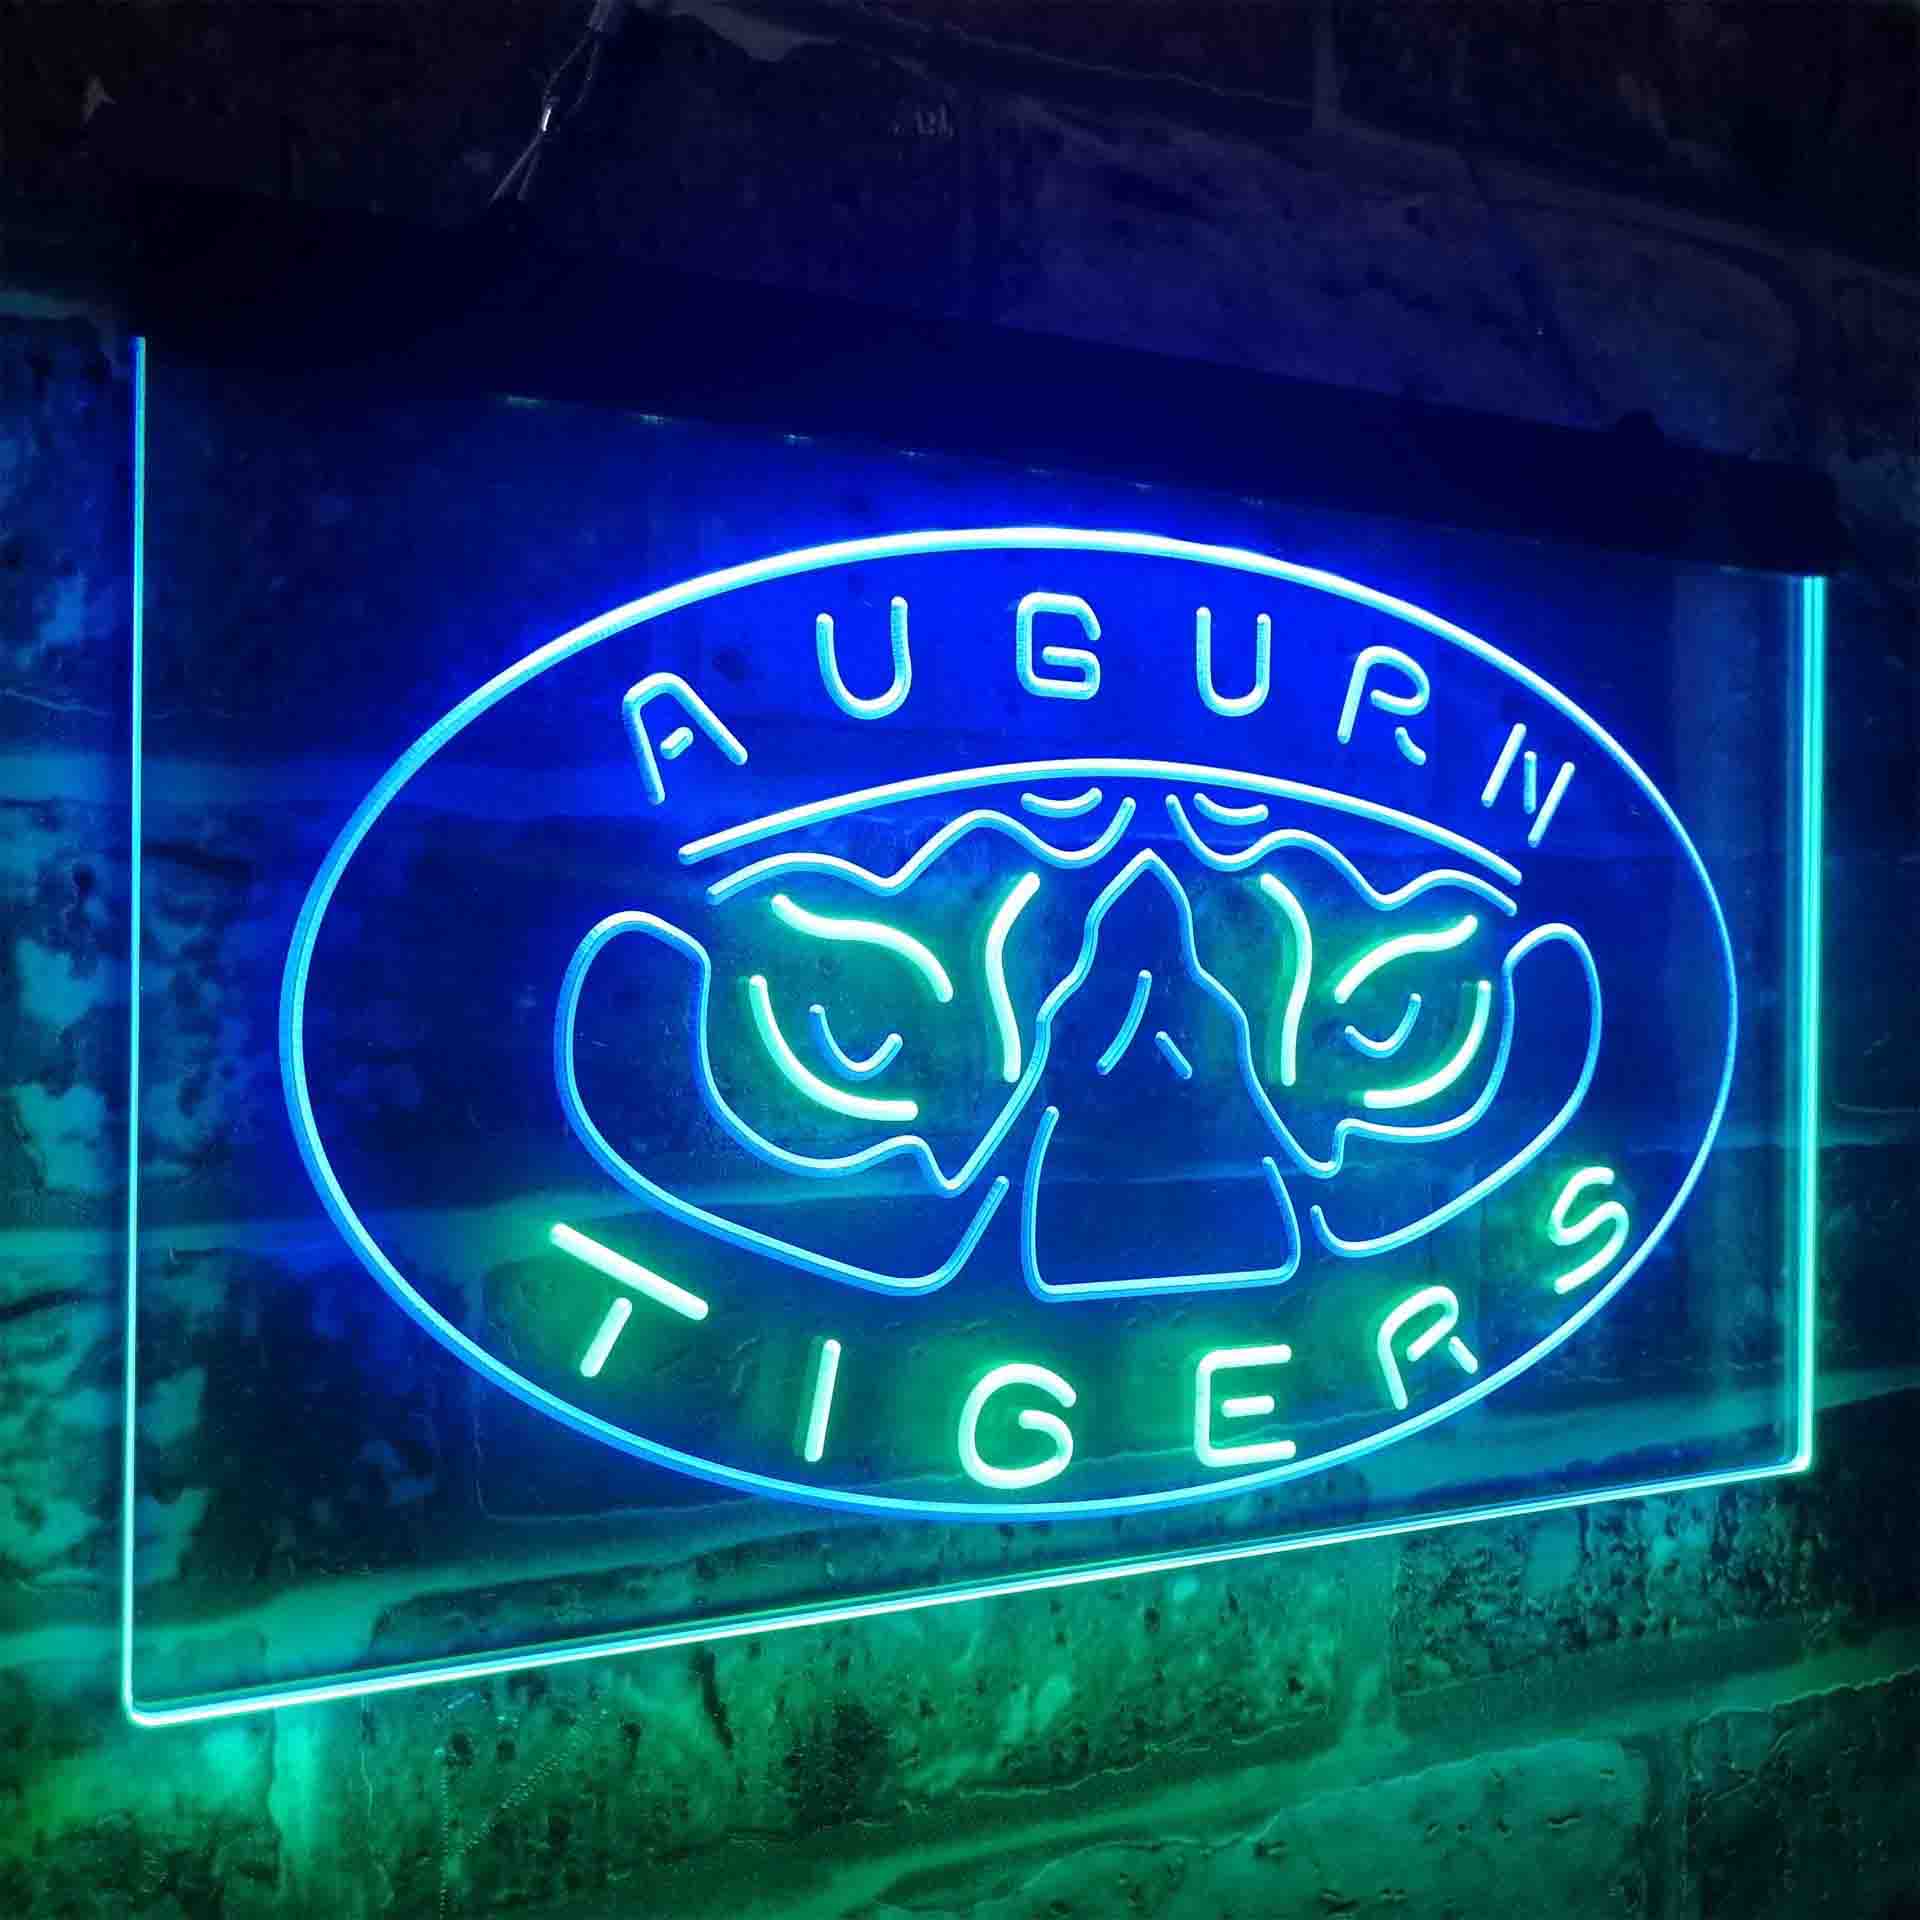 Auburns Football Club League Tigers LED Neon Sign